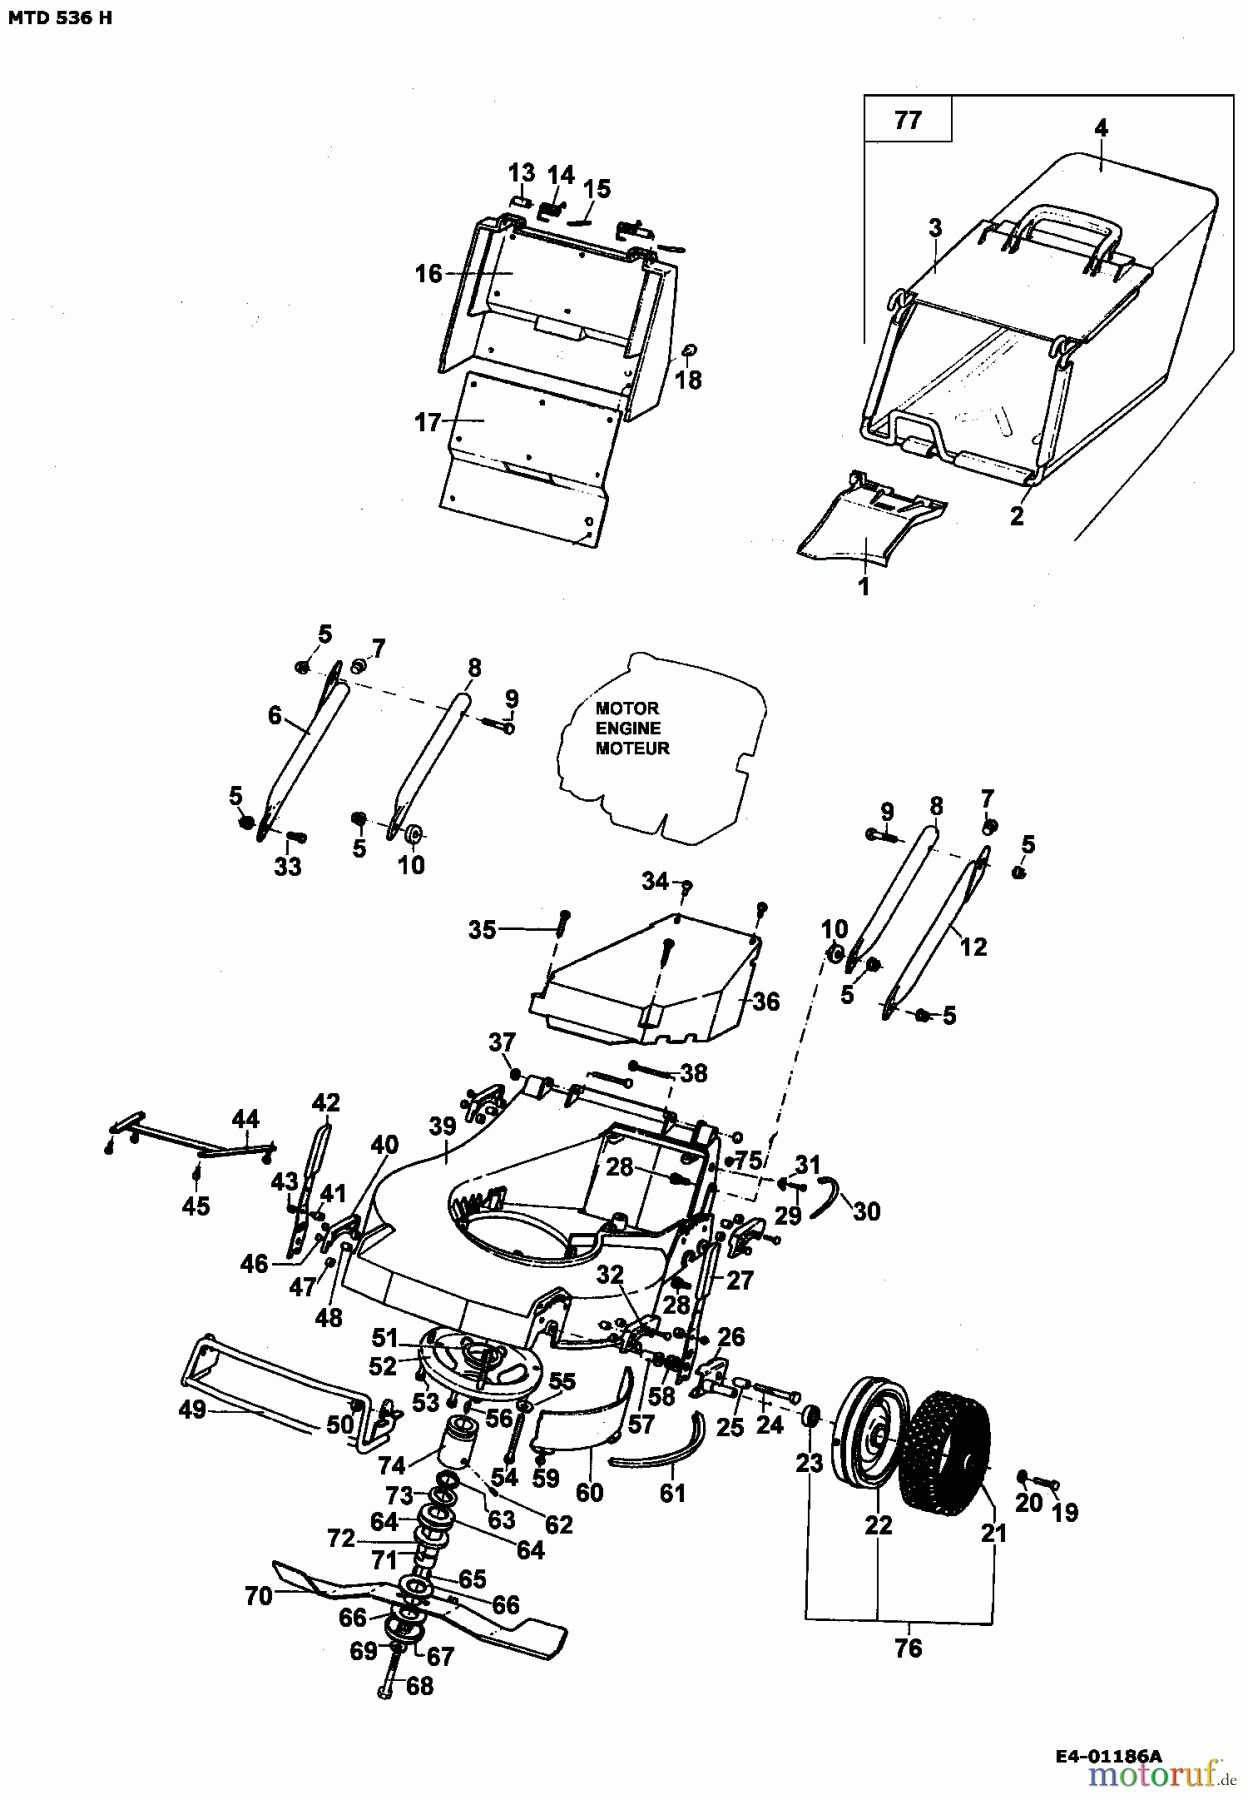  MTD Motormäher mit Antrieb 536 H 902B530A001  (1994) Grundgerät